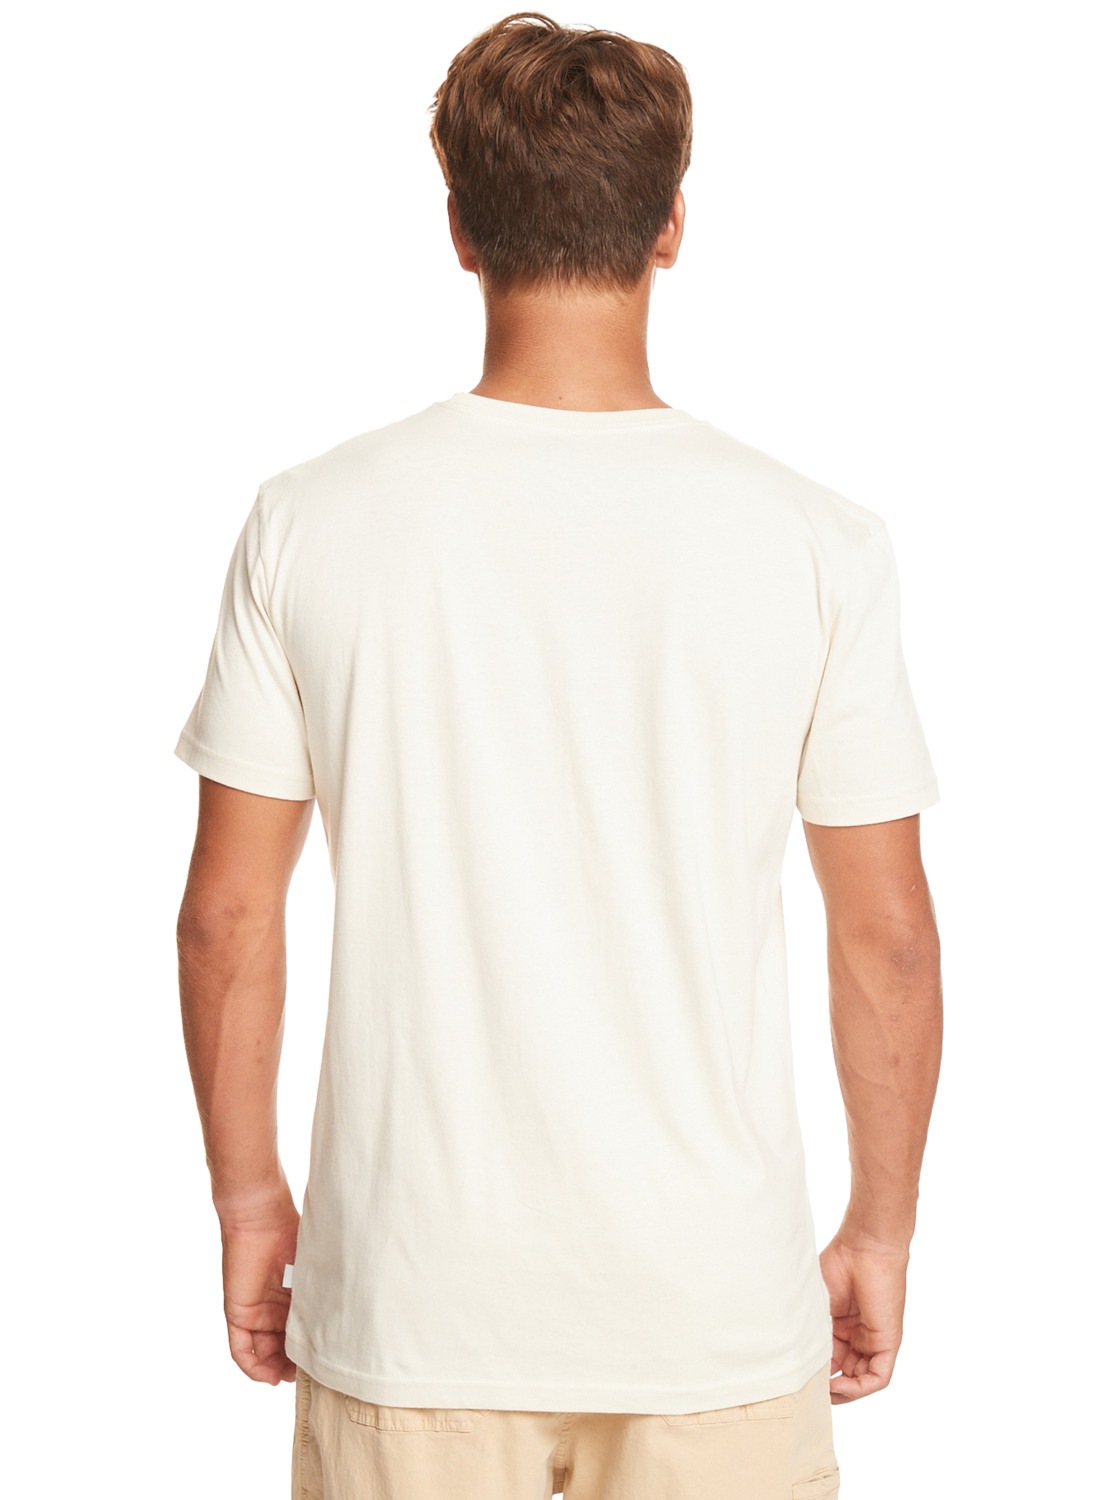 Stripe« T-Shirt online Quiksilver »Mesa bestellen bei OTTO